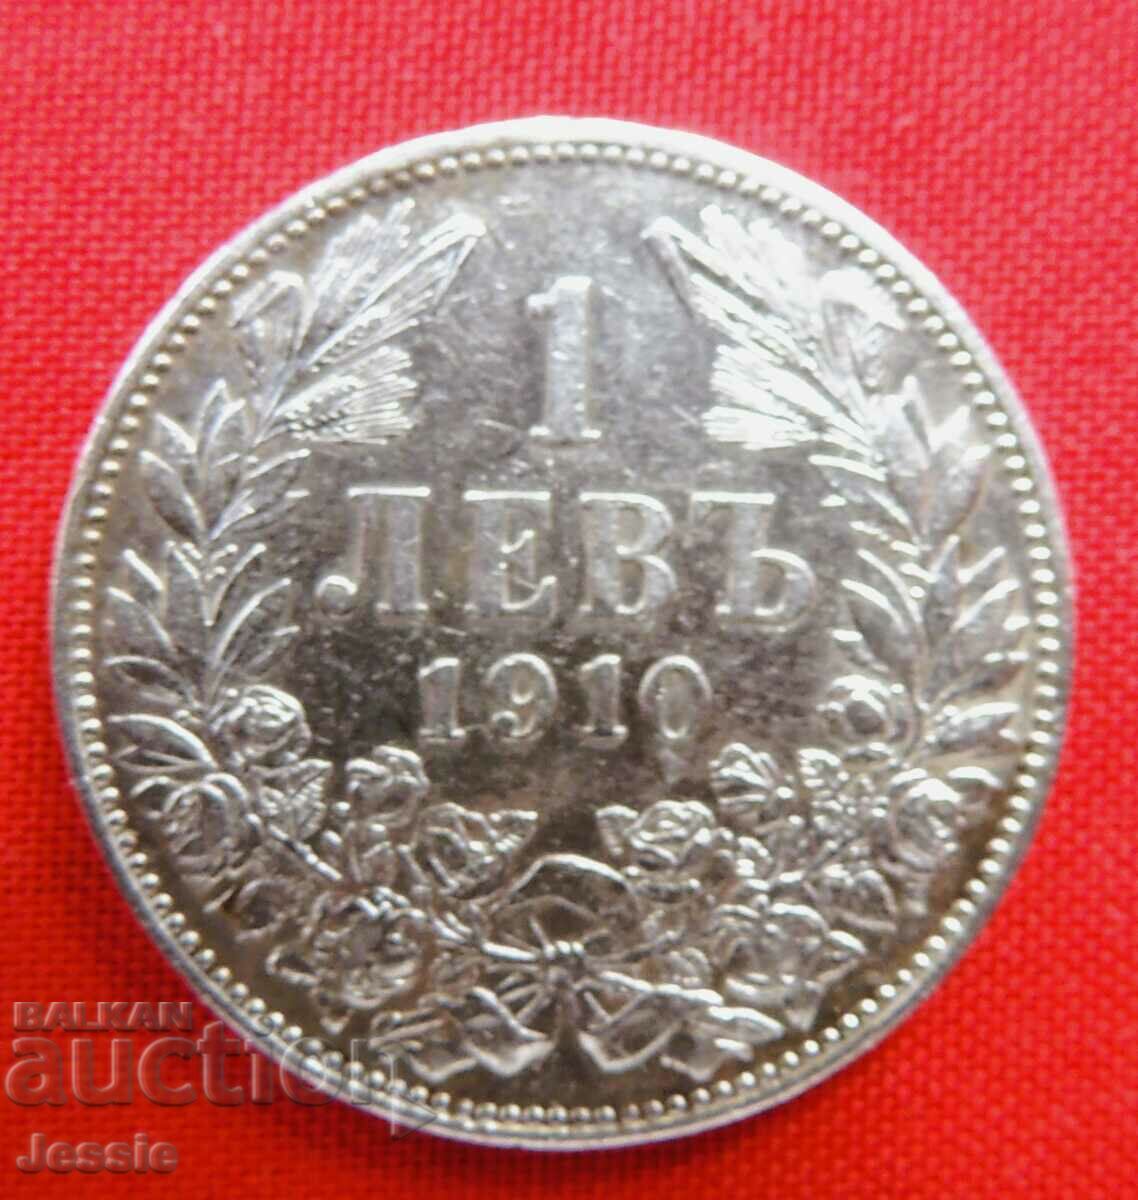 1 BGN 1910 silver #5